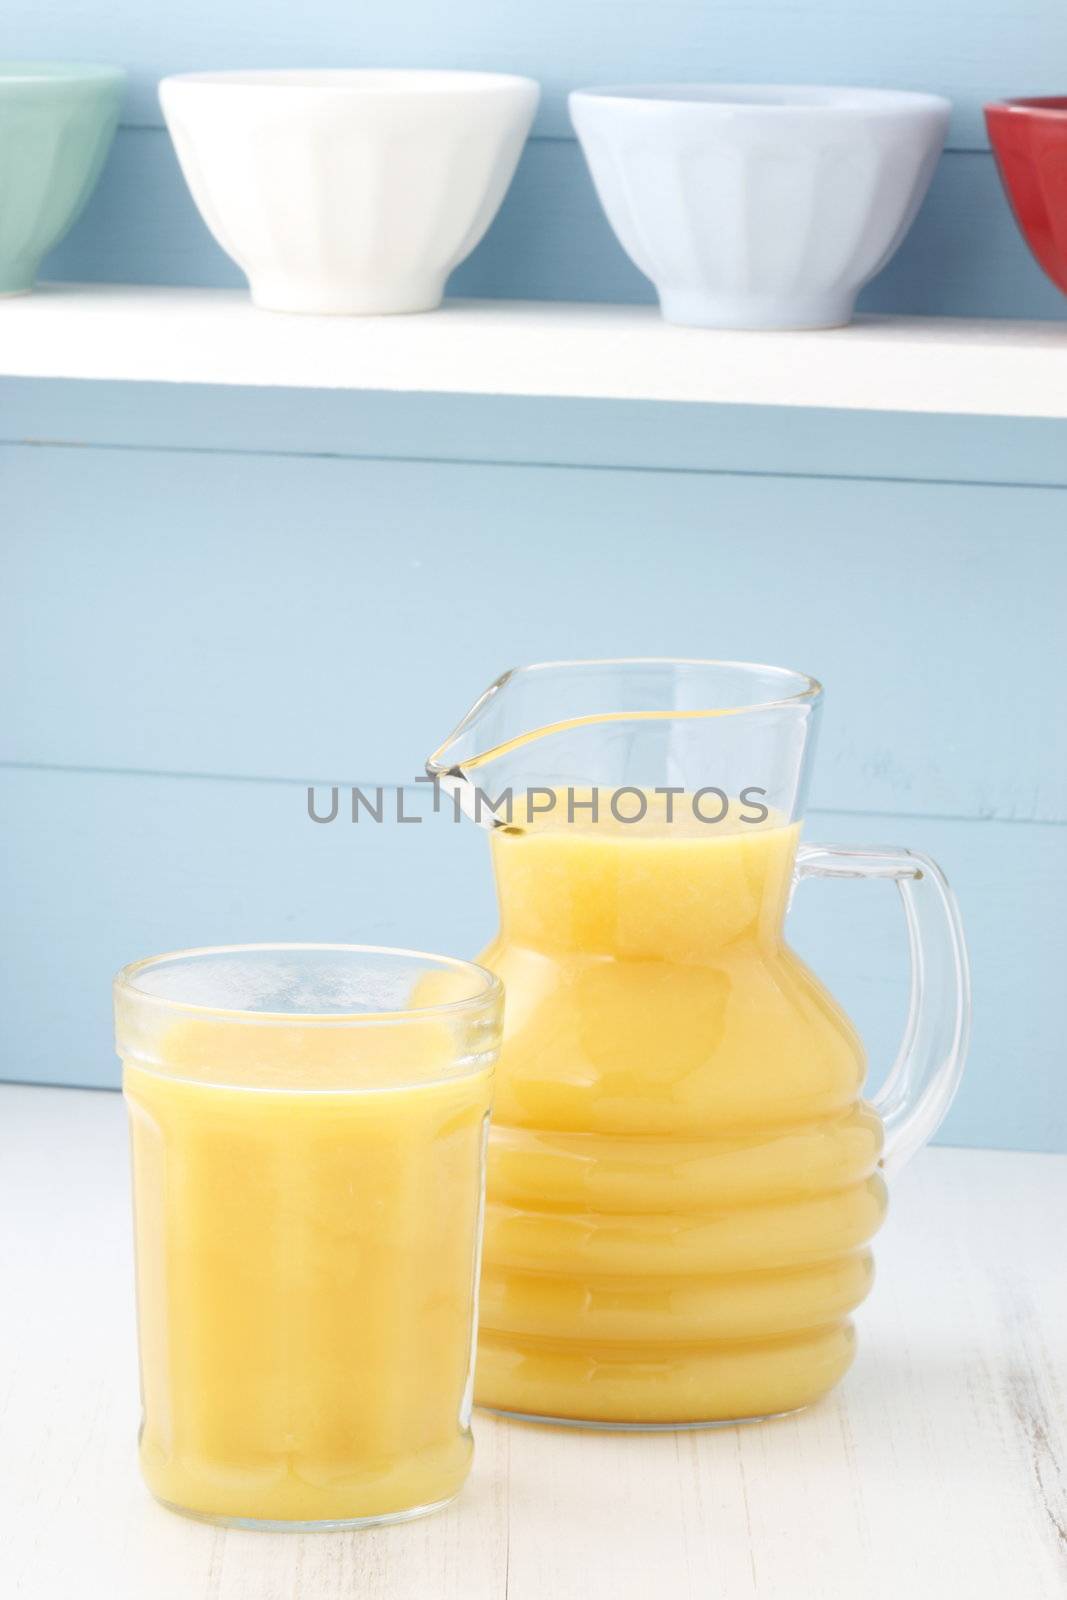 Fresh squeezed orange juice by tacar